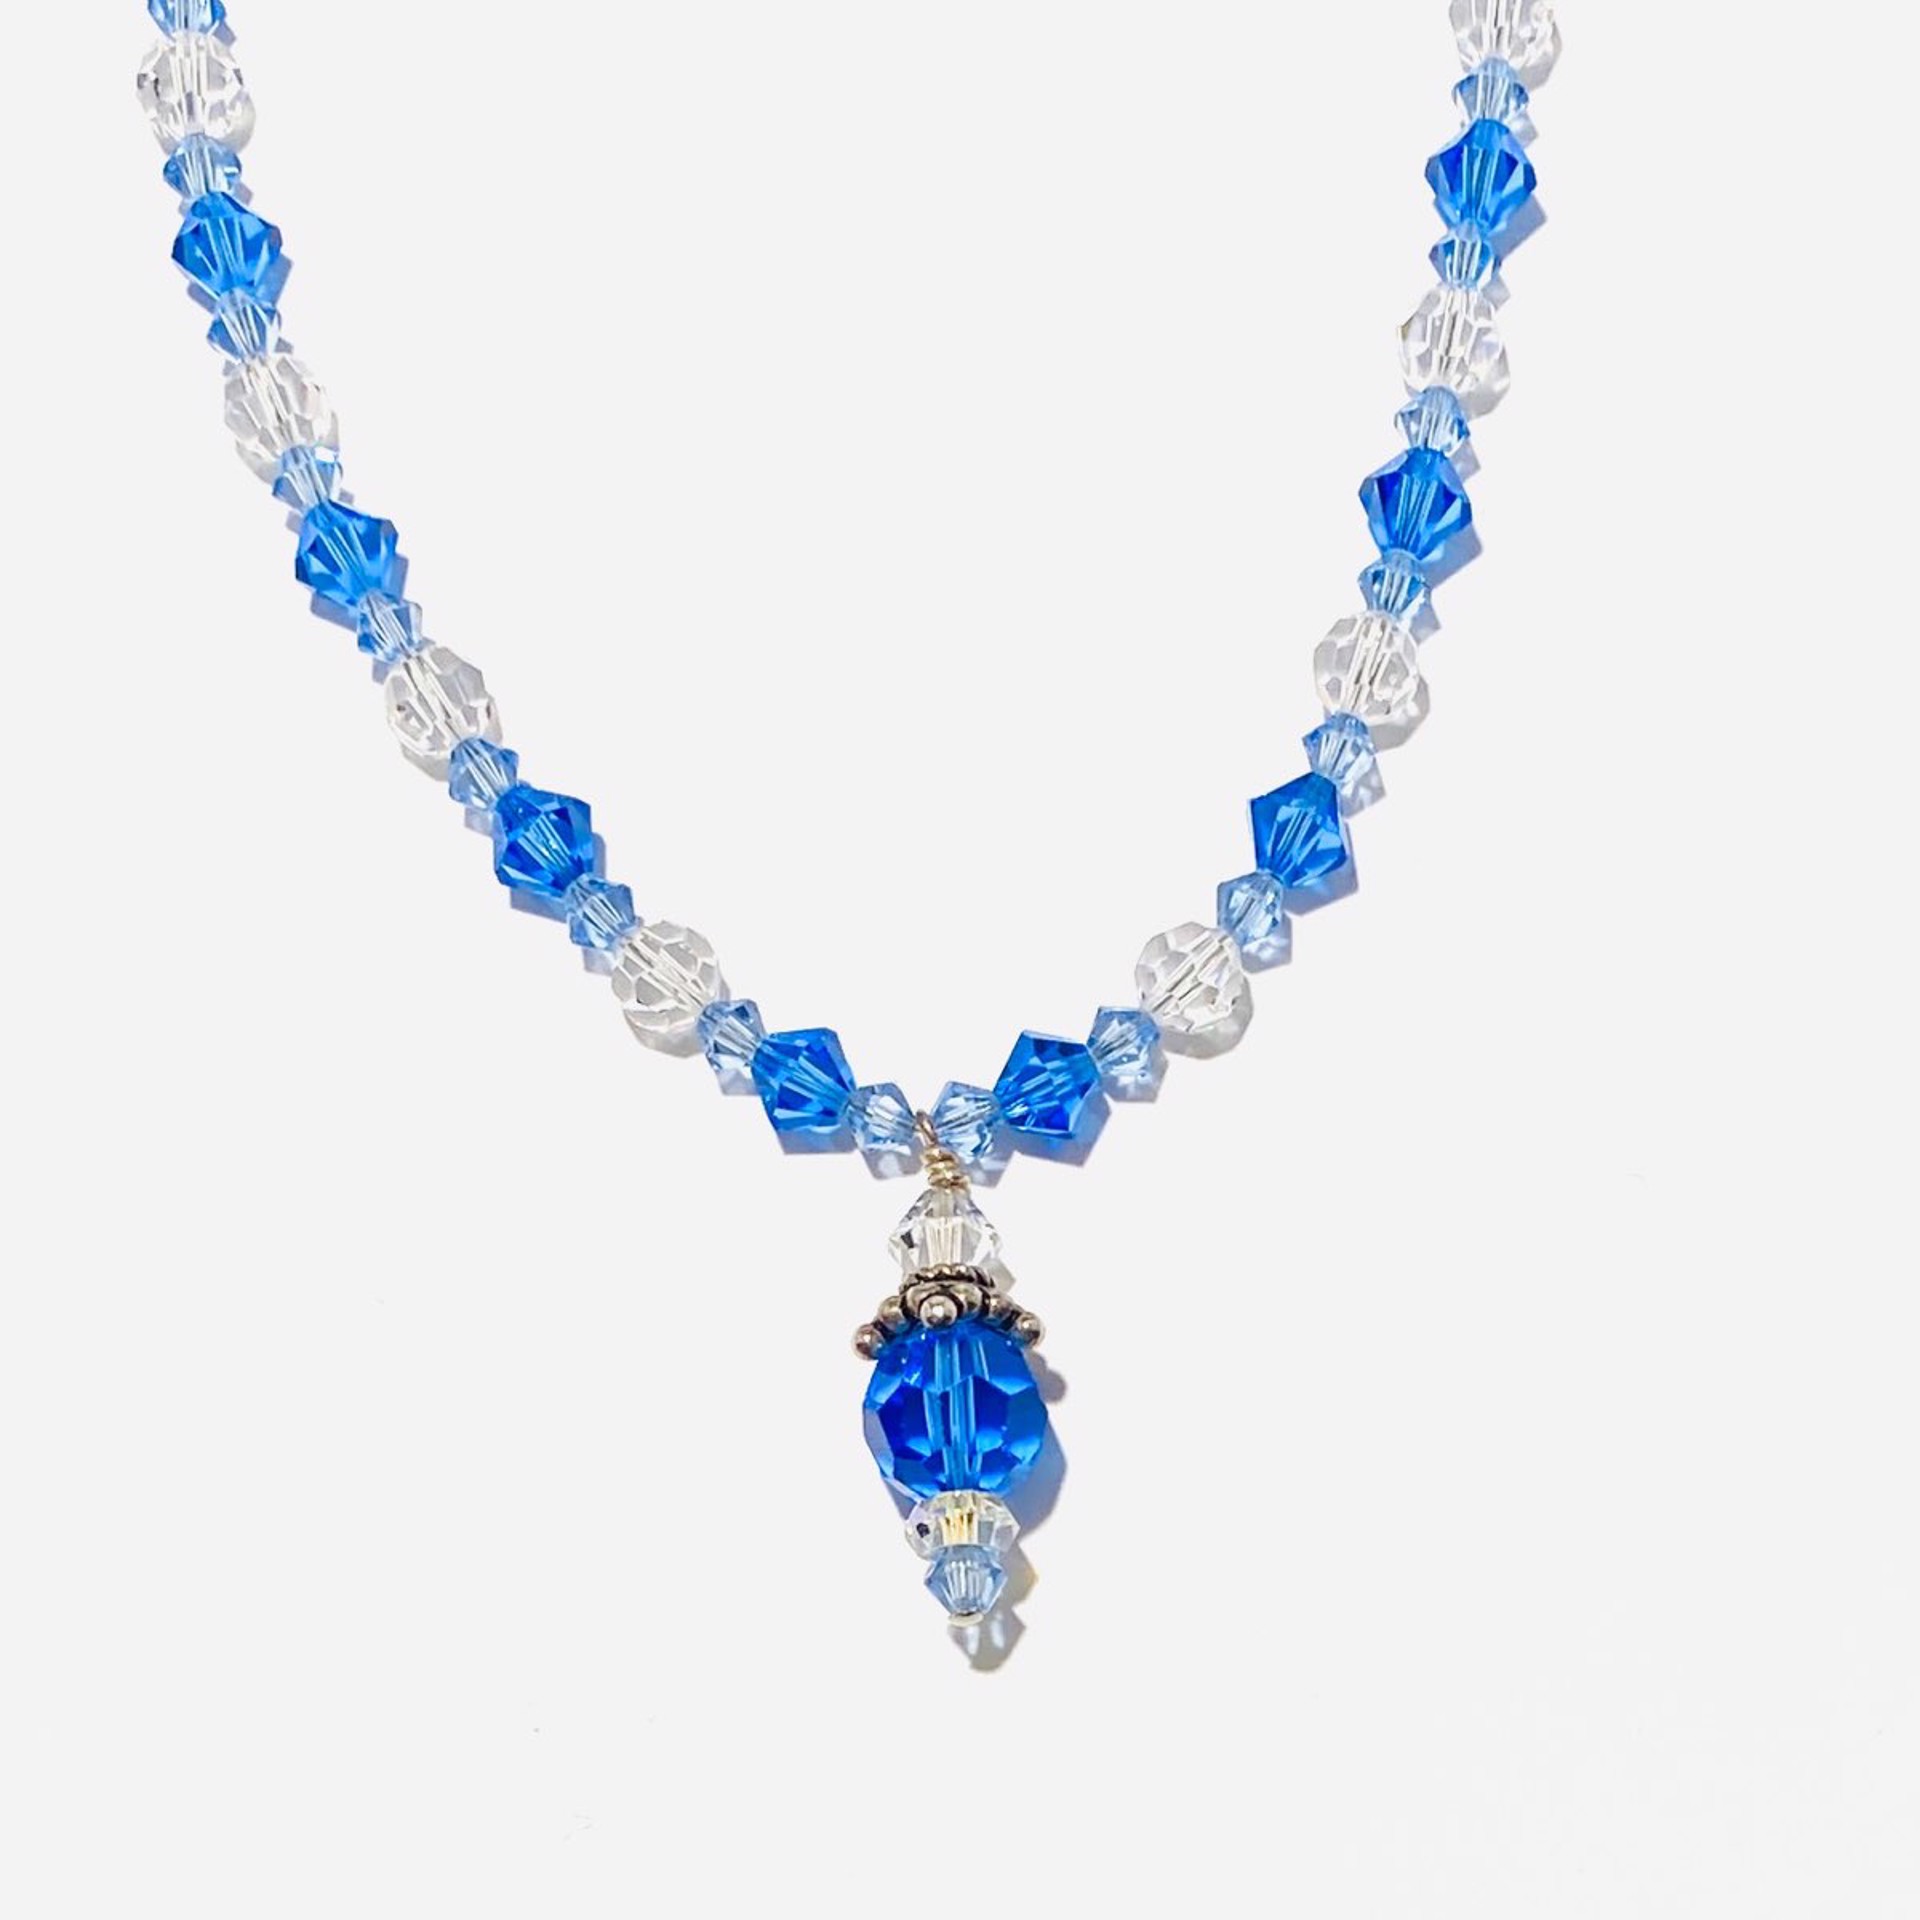 September Birthstone “Sapphire” Swarovski Crystal Necklace SHOSH23-2 by Shoshannah Weinisch